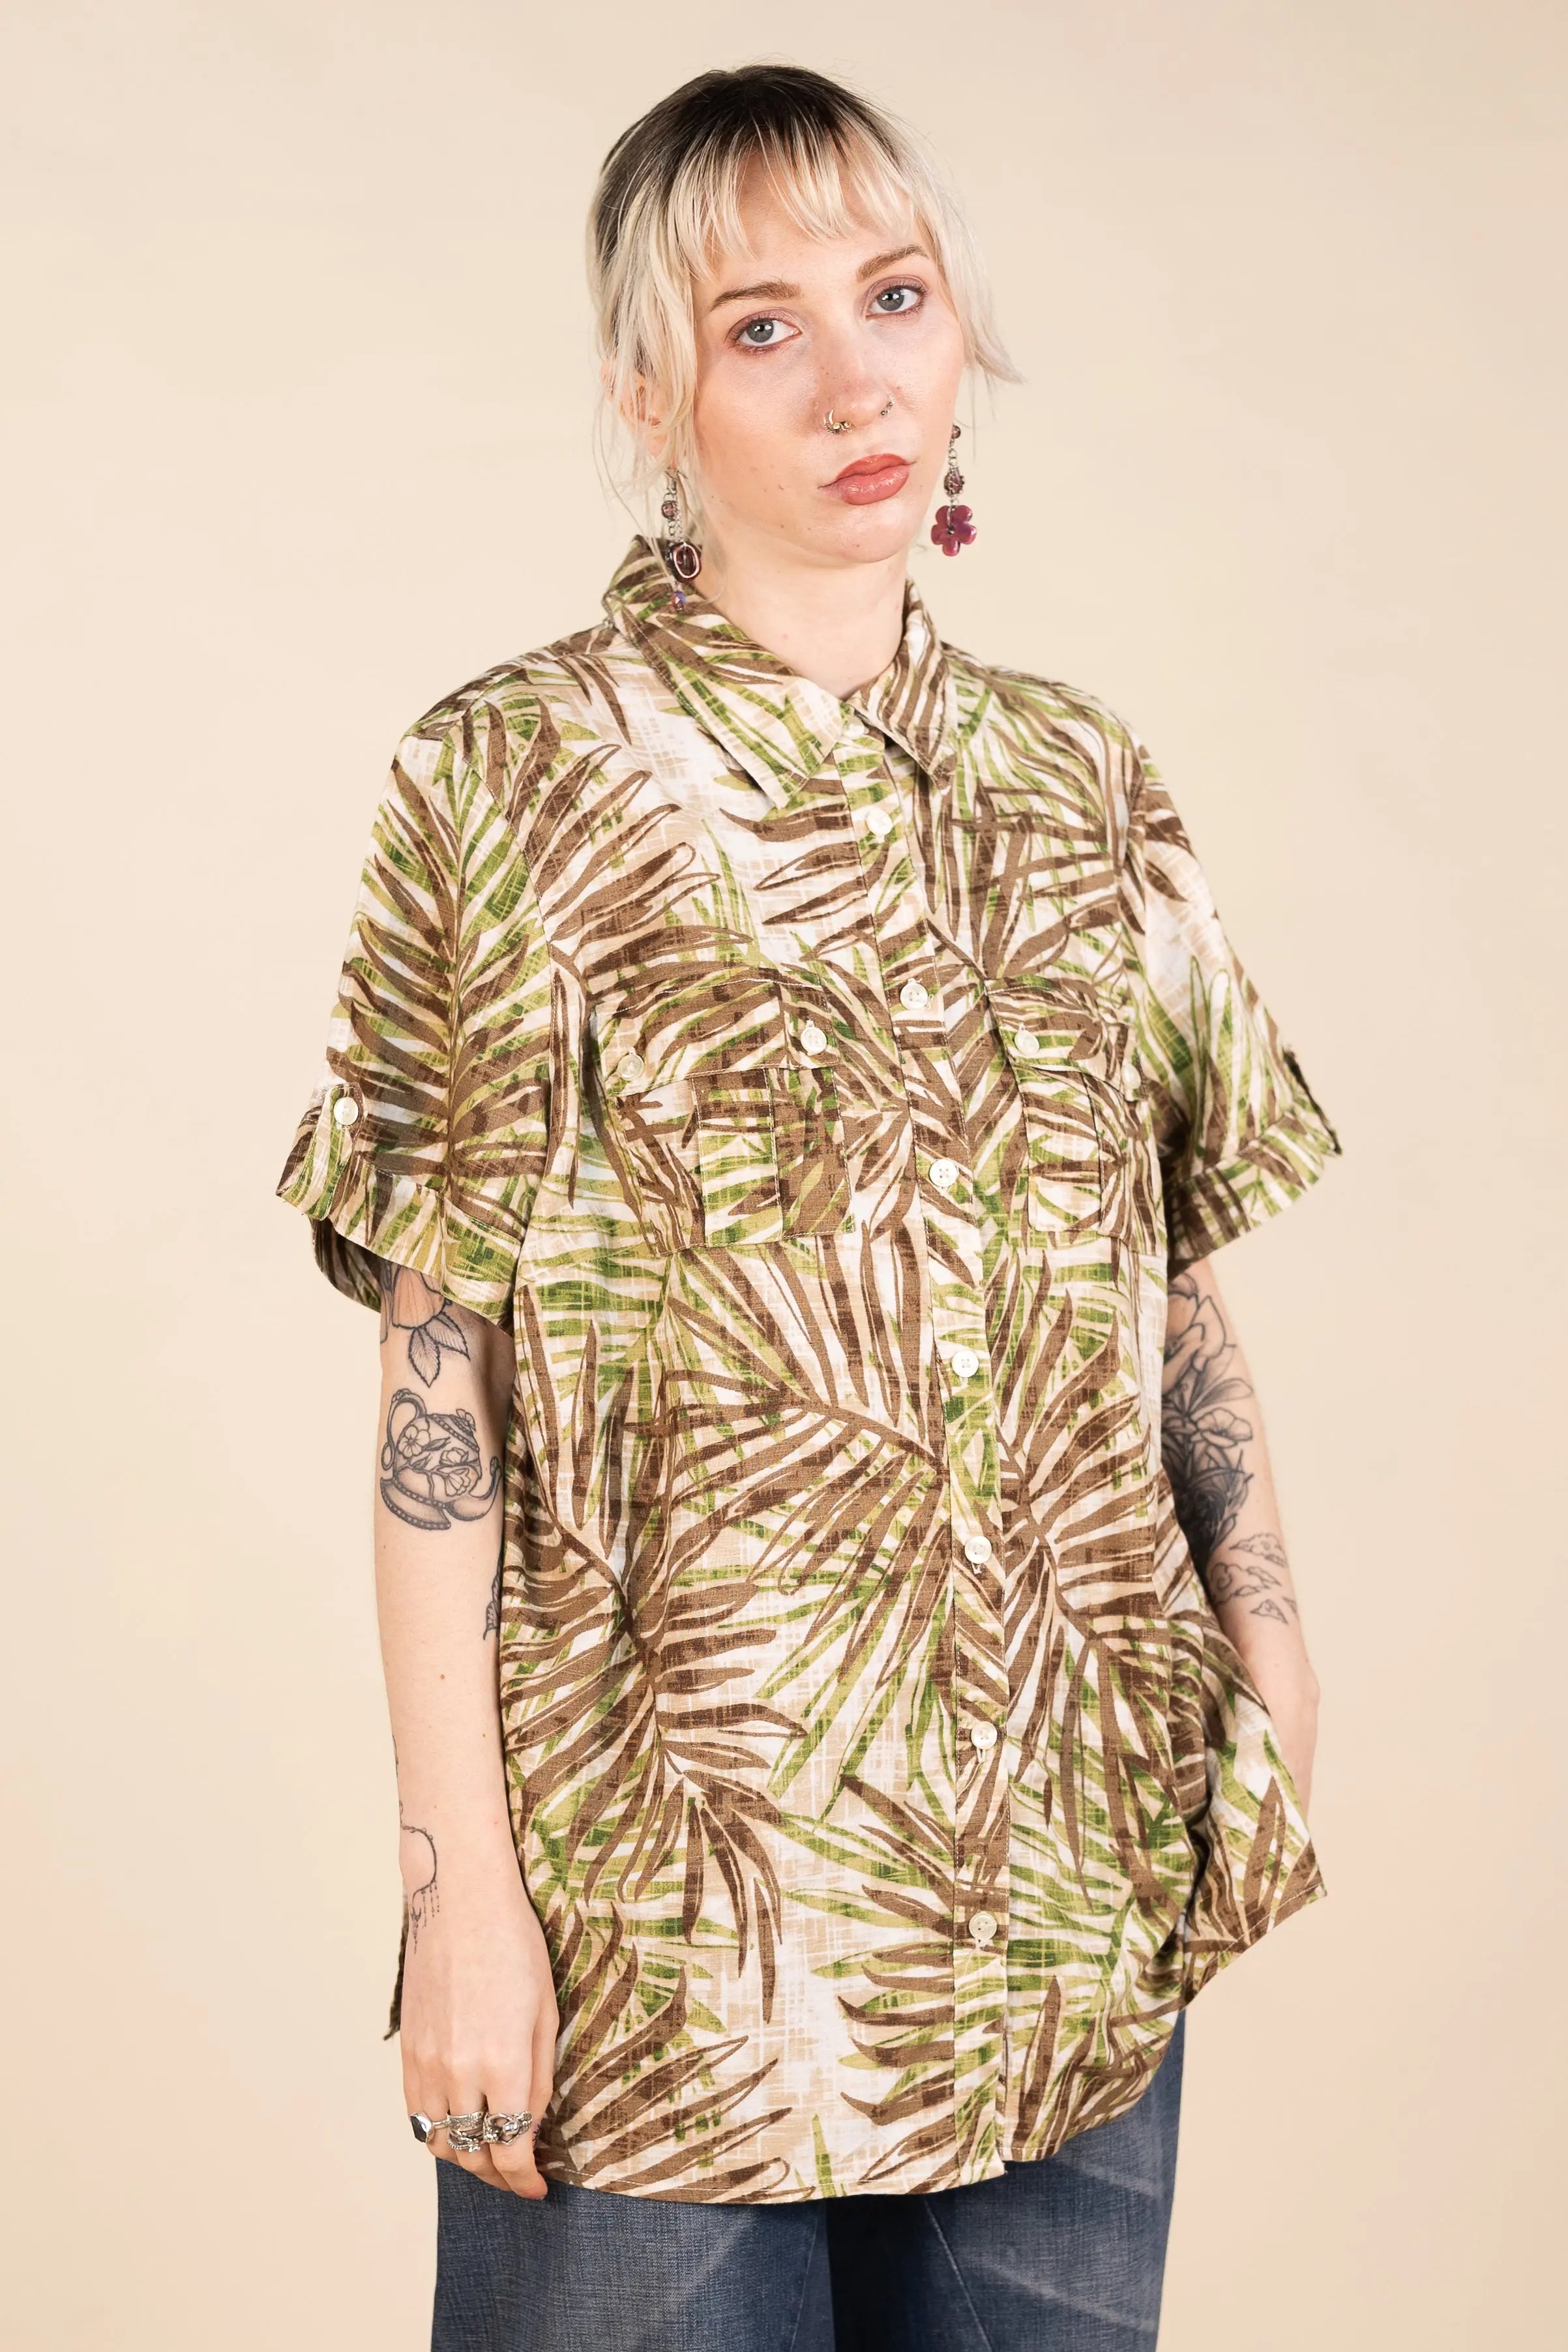 Liz Claiborne - Shirt- ThriftTale.com - Vintage and second handclothing